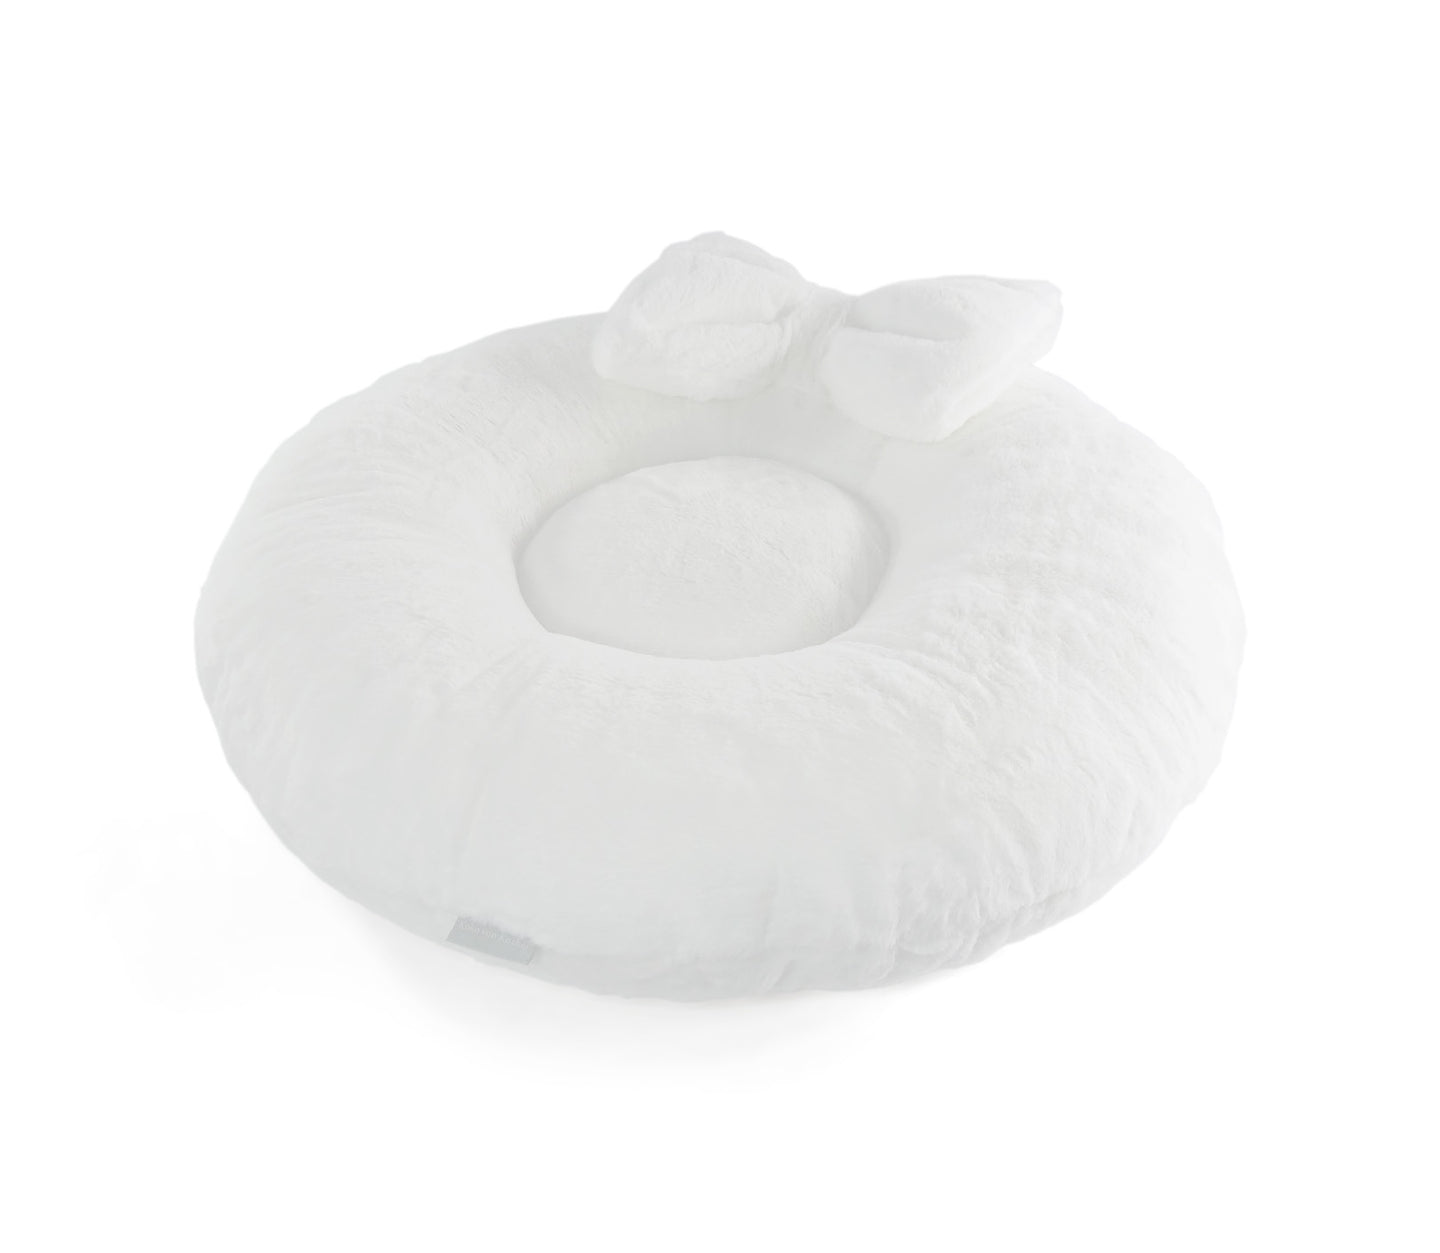 Donut Cushion Off-White - Dog Pillow